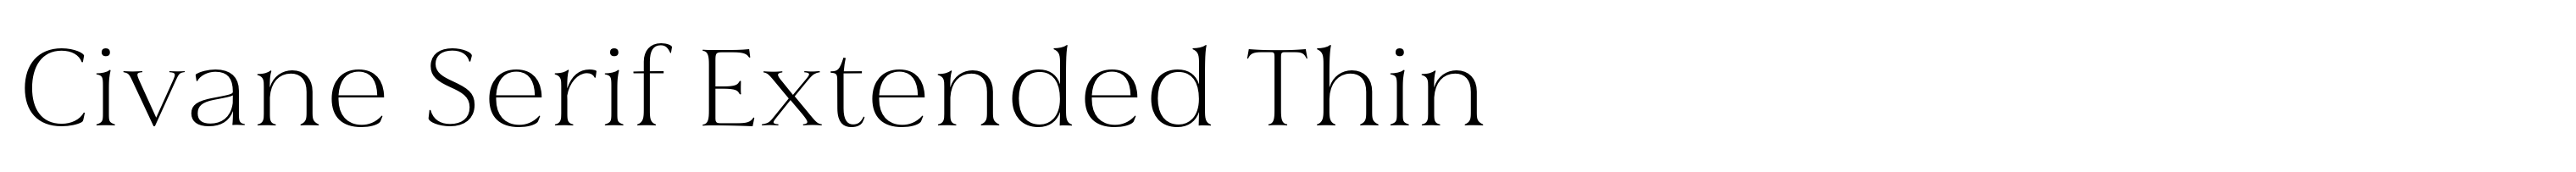 Civane Serif Extended Thin